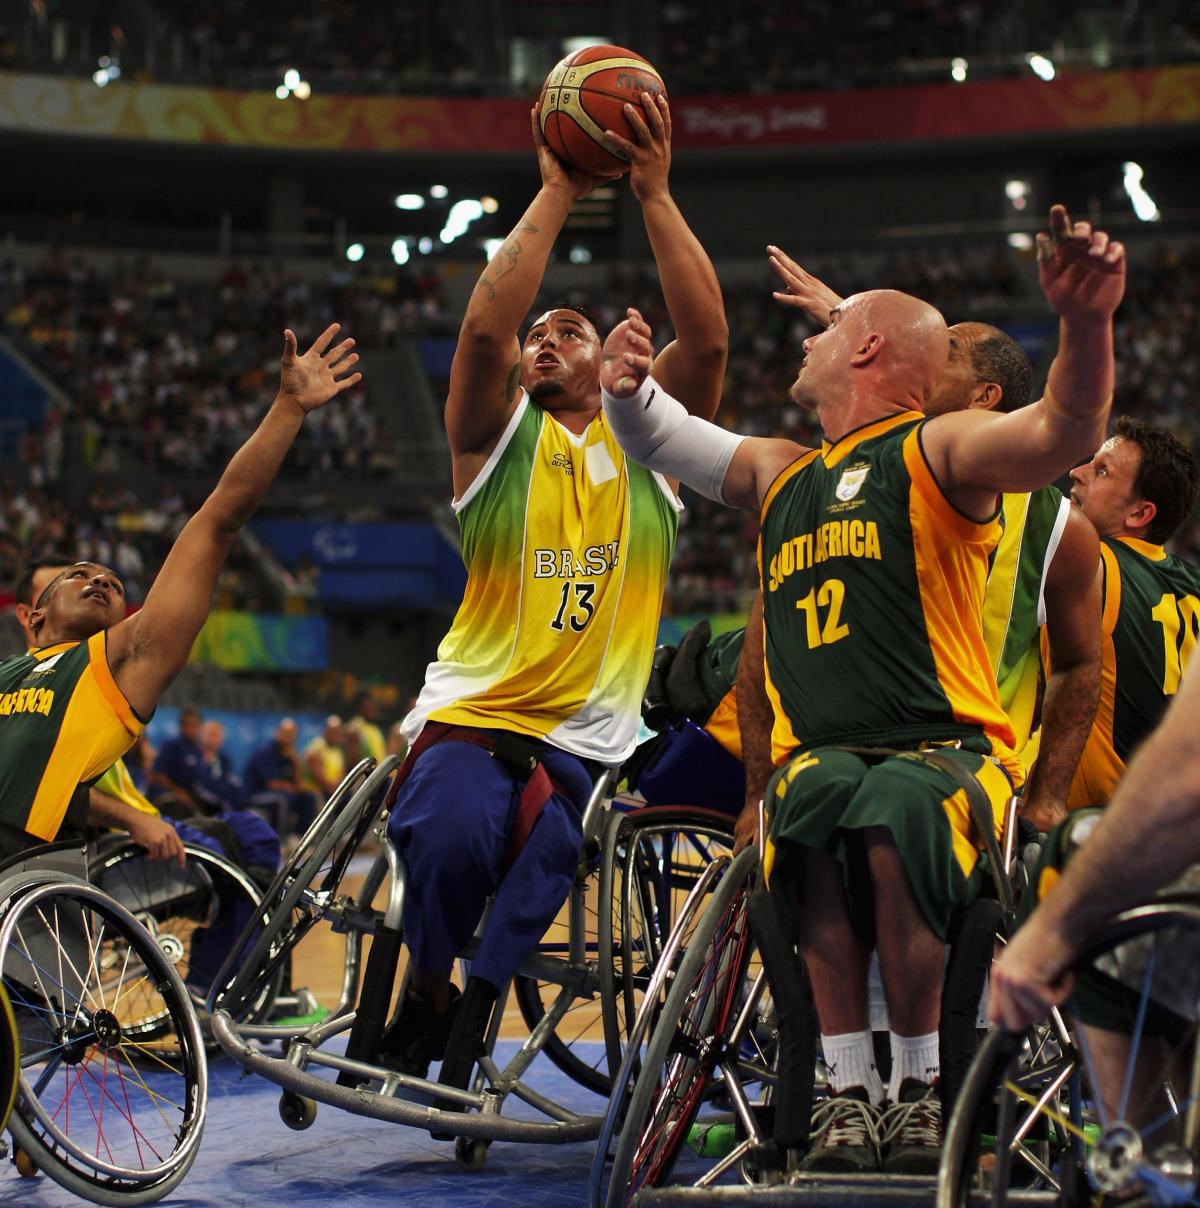 Athletes Practicing Wheelchair Basketball